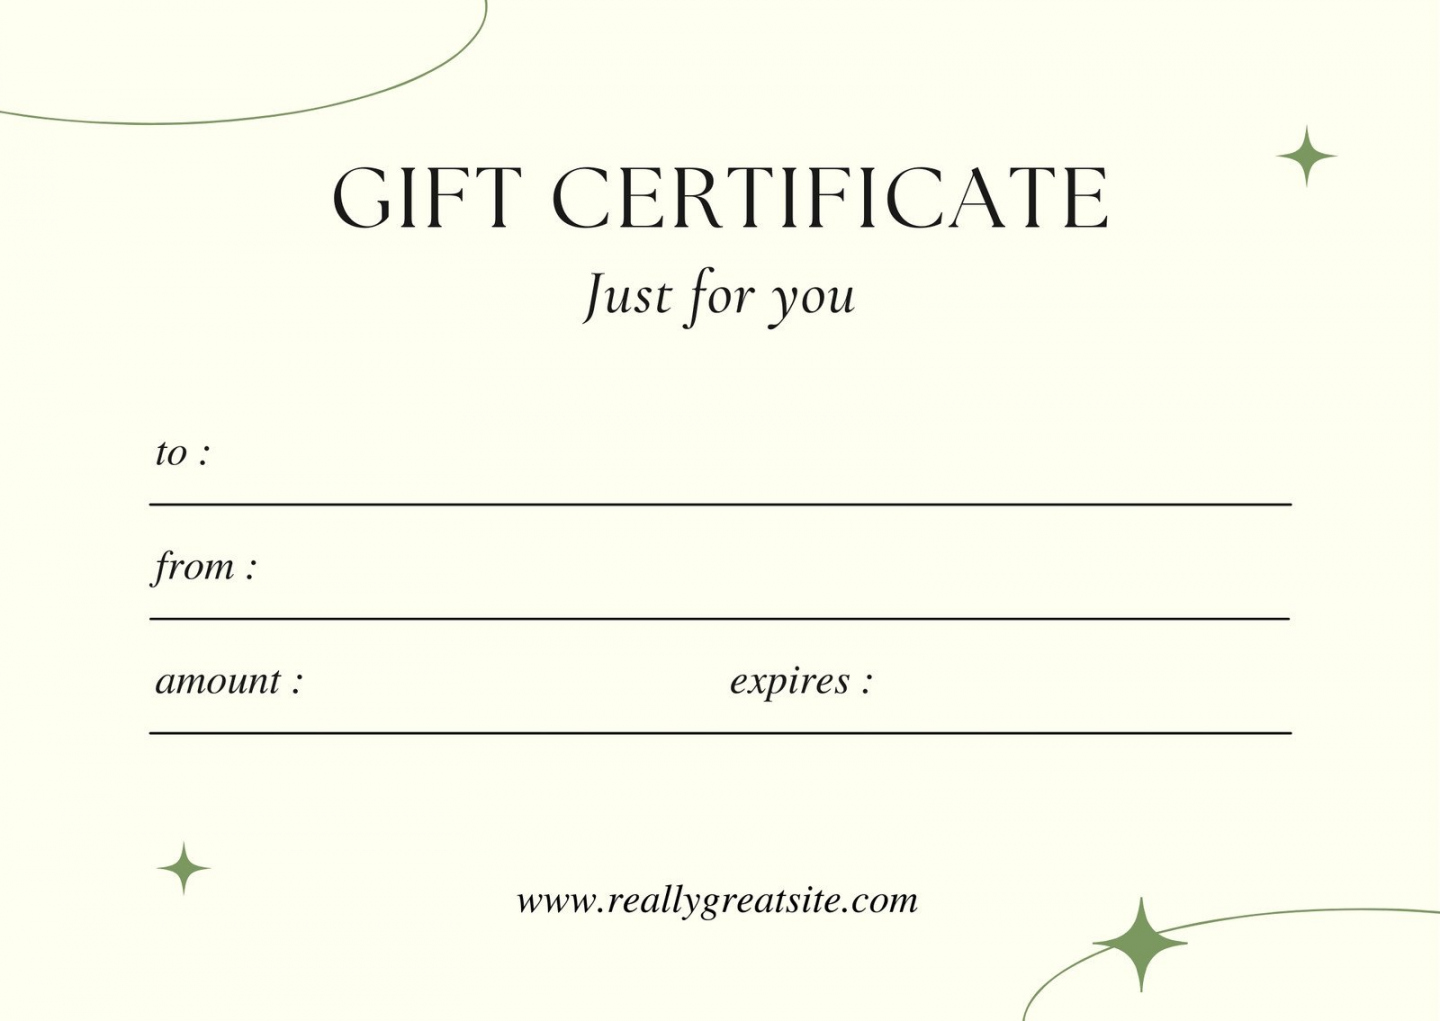 Free Gift Certificate Printable - Printable - Page  - Free, printable gift certificate templates to customize